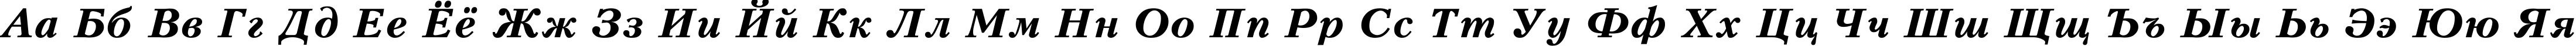 Пример написания русского алфавита шрифтом Peterburg Bold Italic